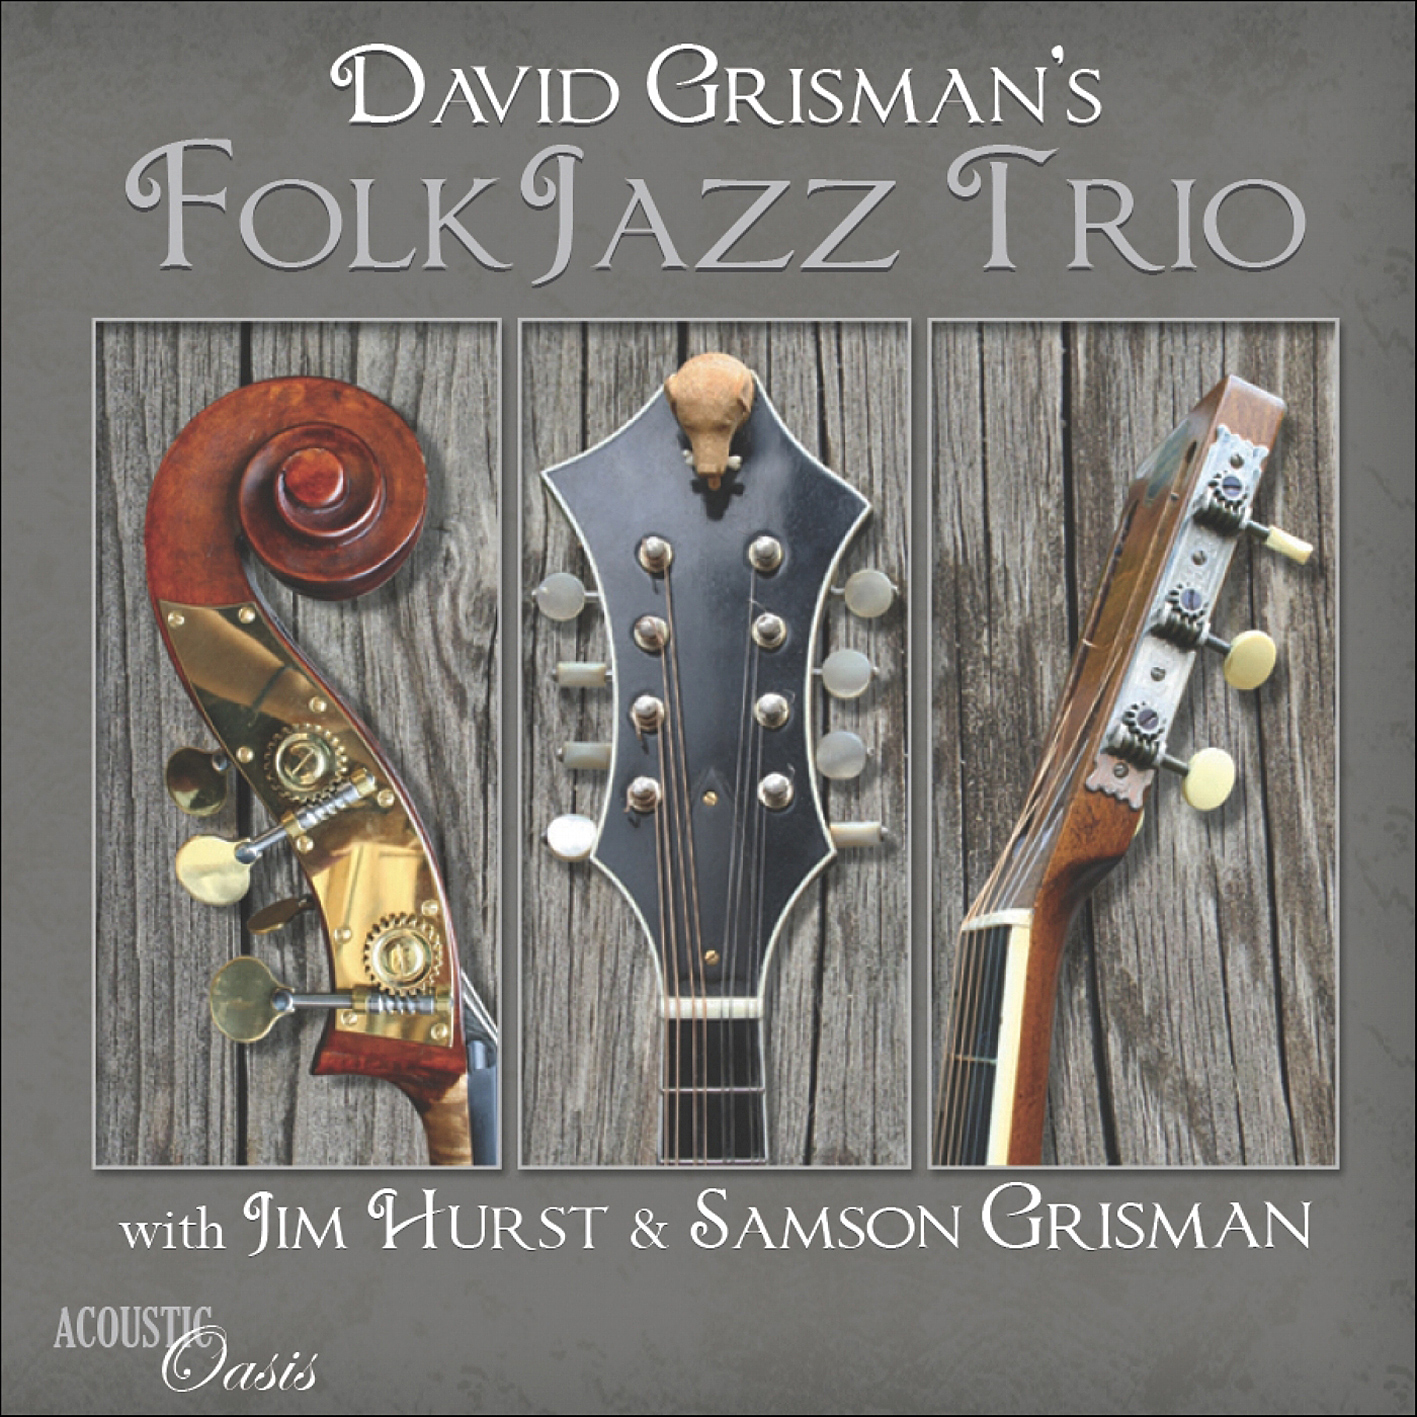 David Grisman - David Grisman’s Folk Jazz Trio (2011/2017) [HDTracks FLAC 24bit/96kHz]